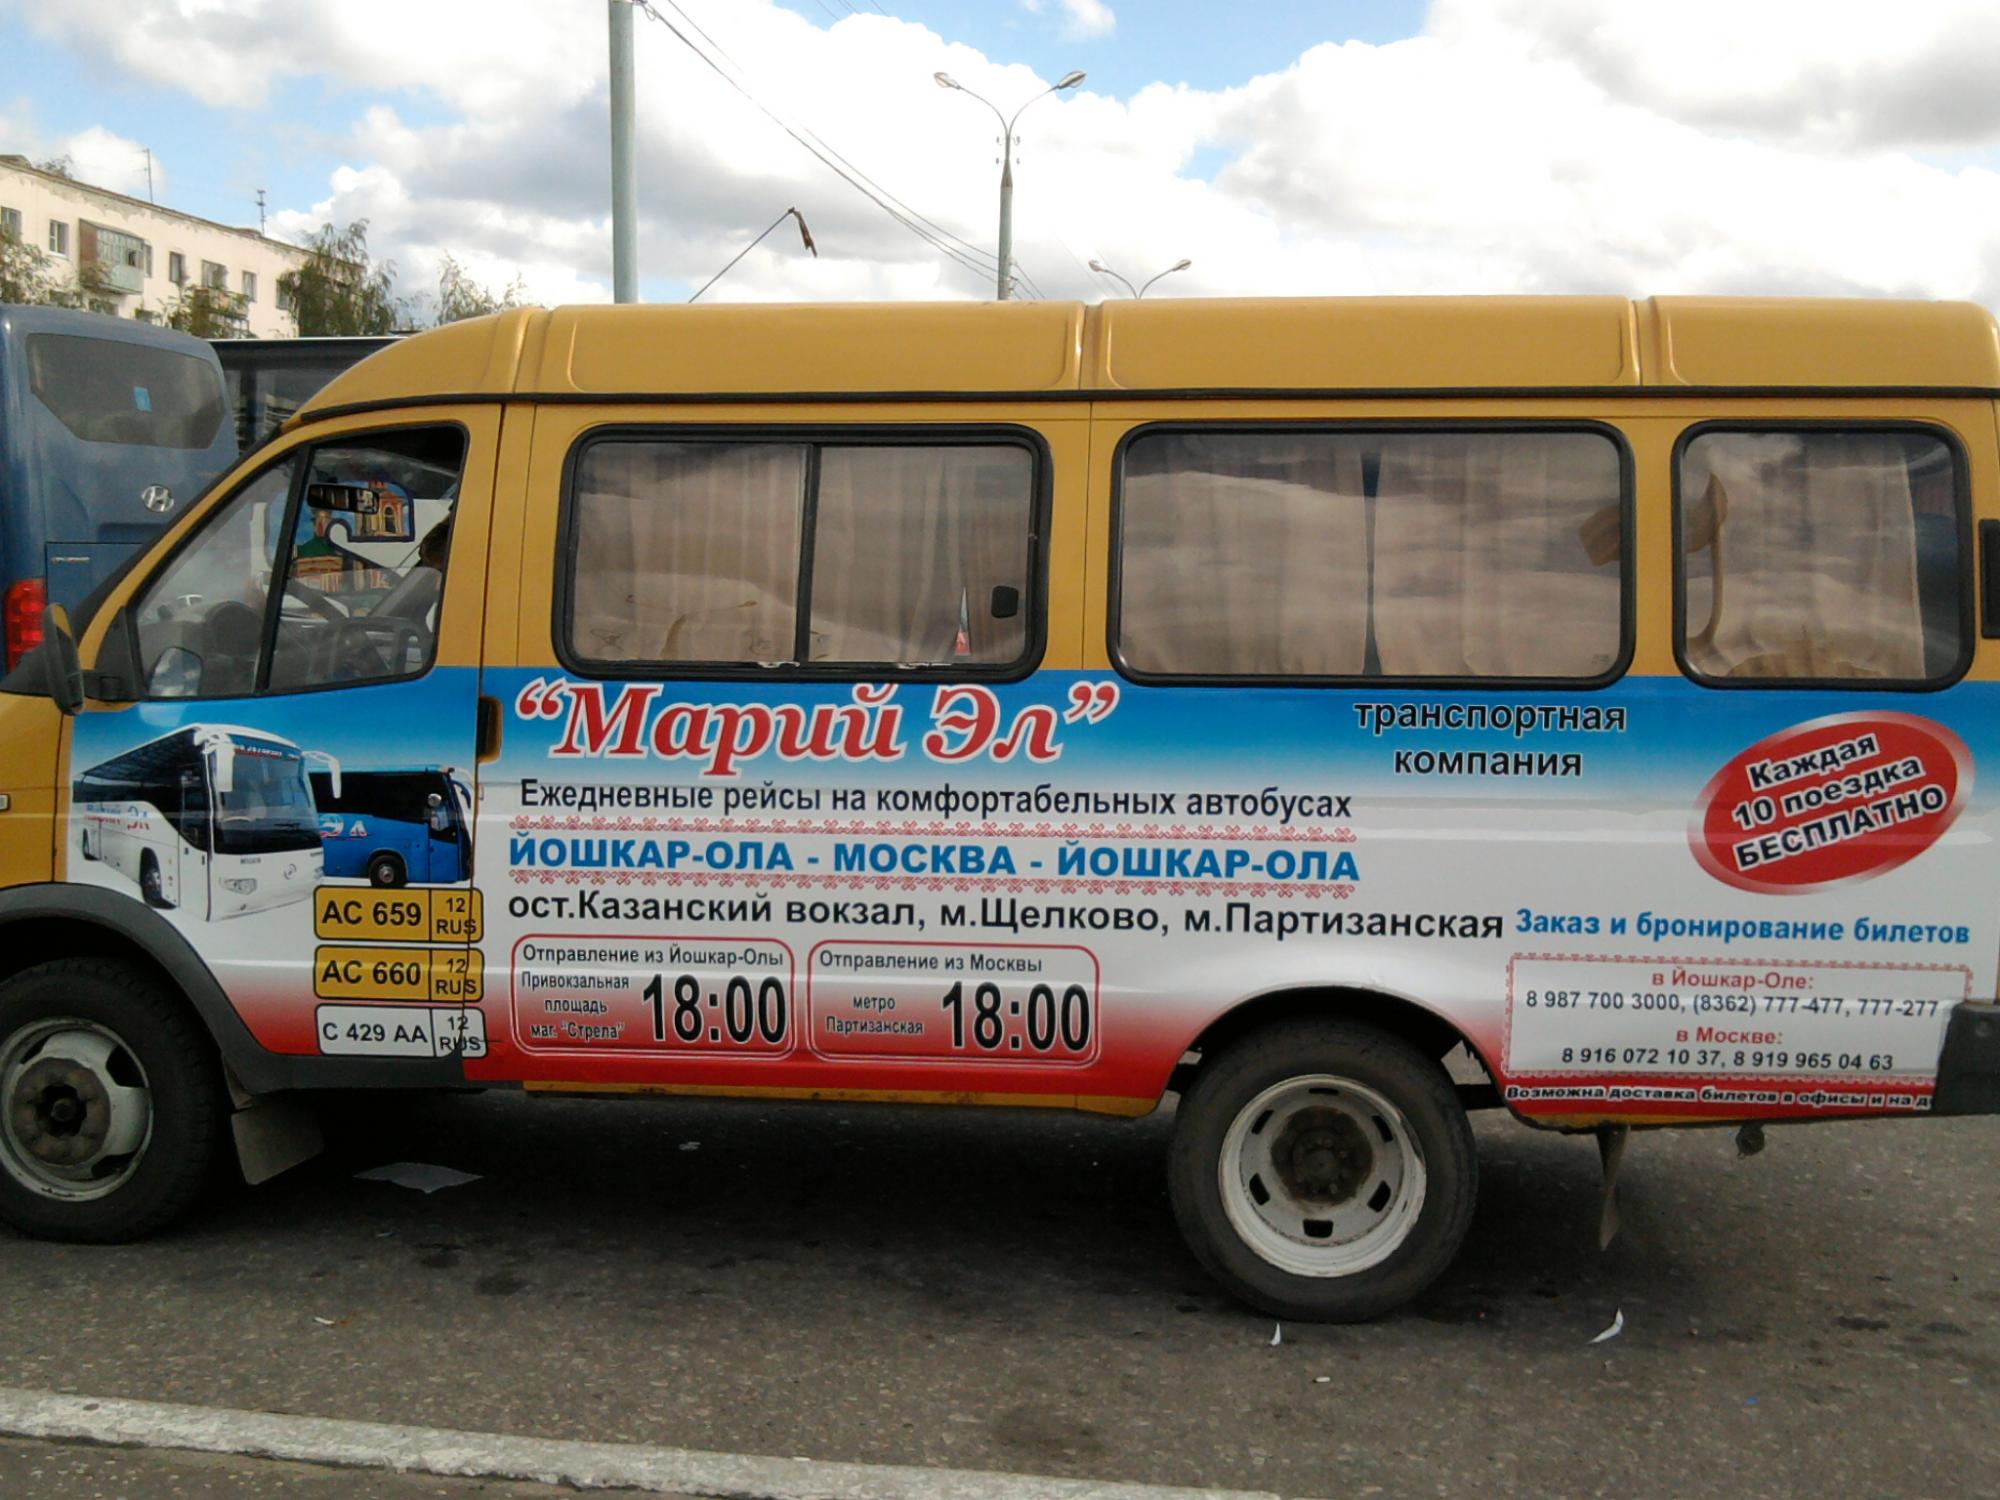 Еду москва йошкар ола. Реклама на транспорте. Автобус Москва Йошкар Ола. Автобус Москва-Йошкар-Ола расписание. Реклама на транспорте примеры.